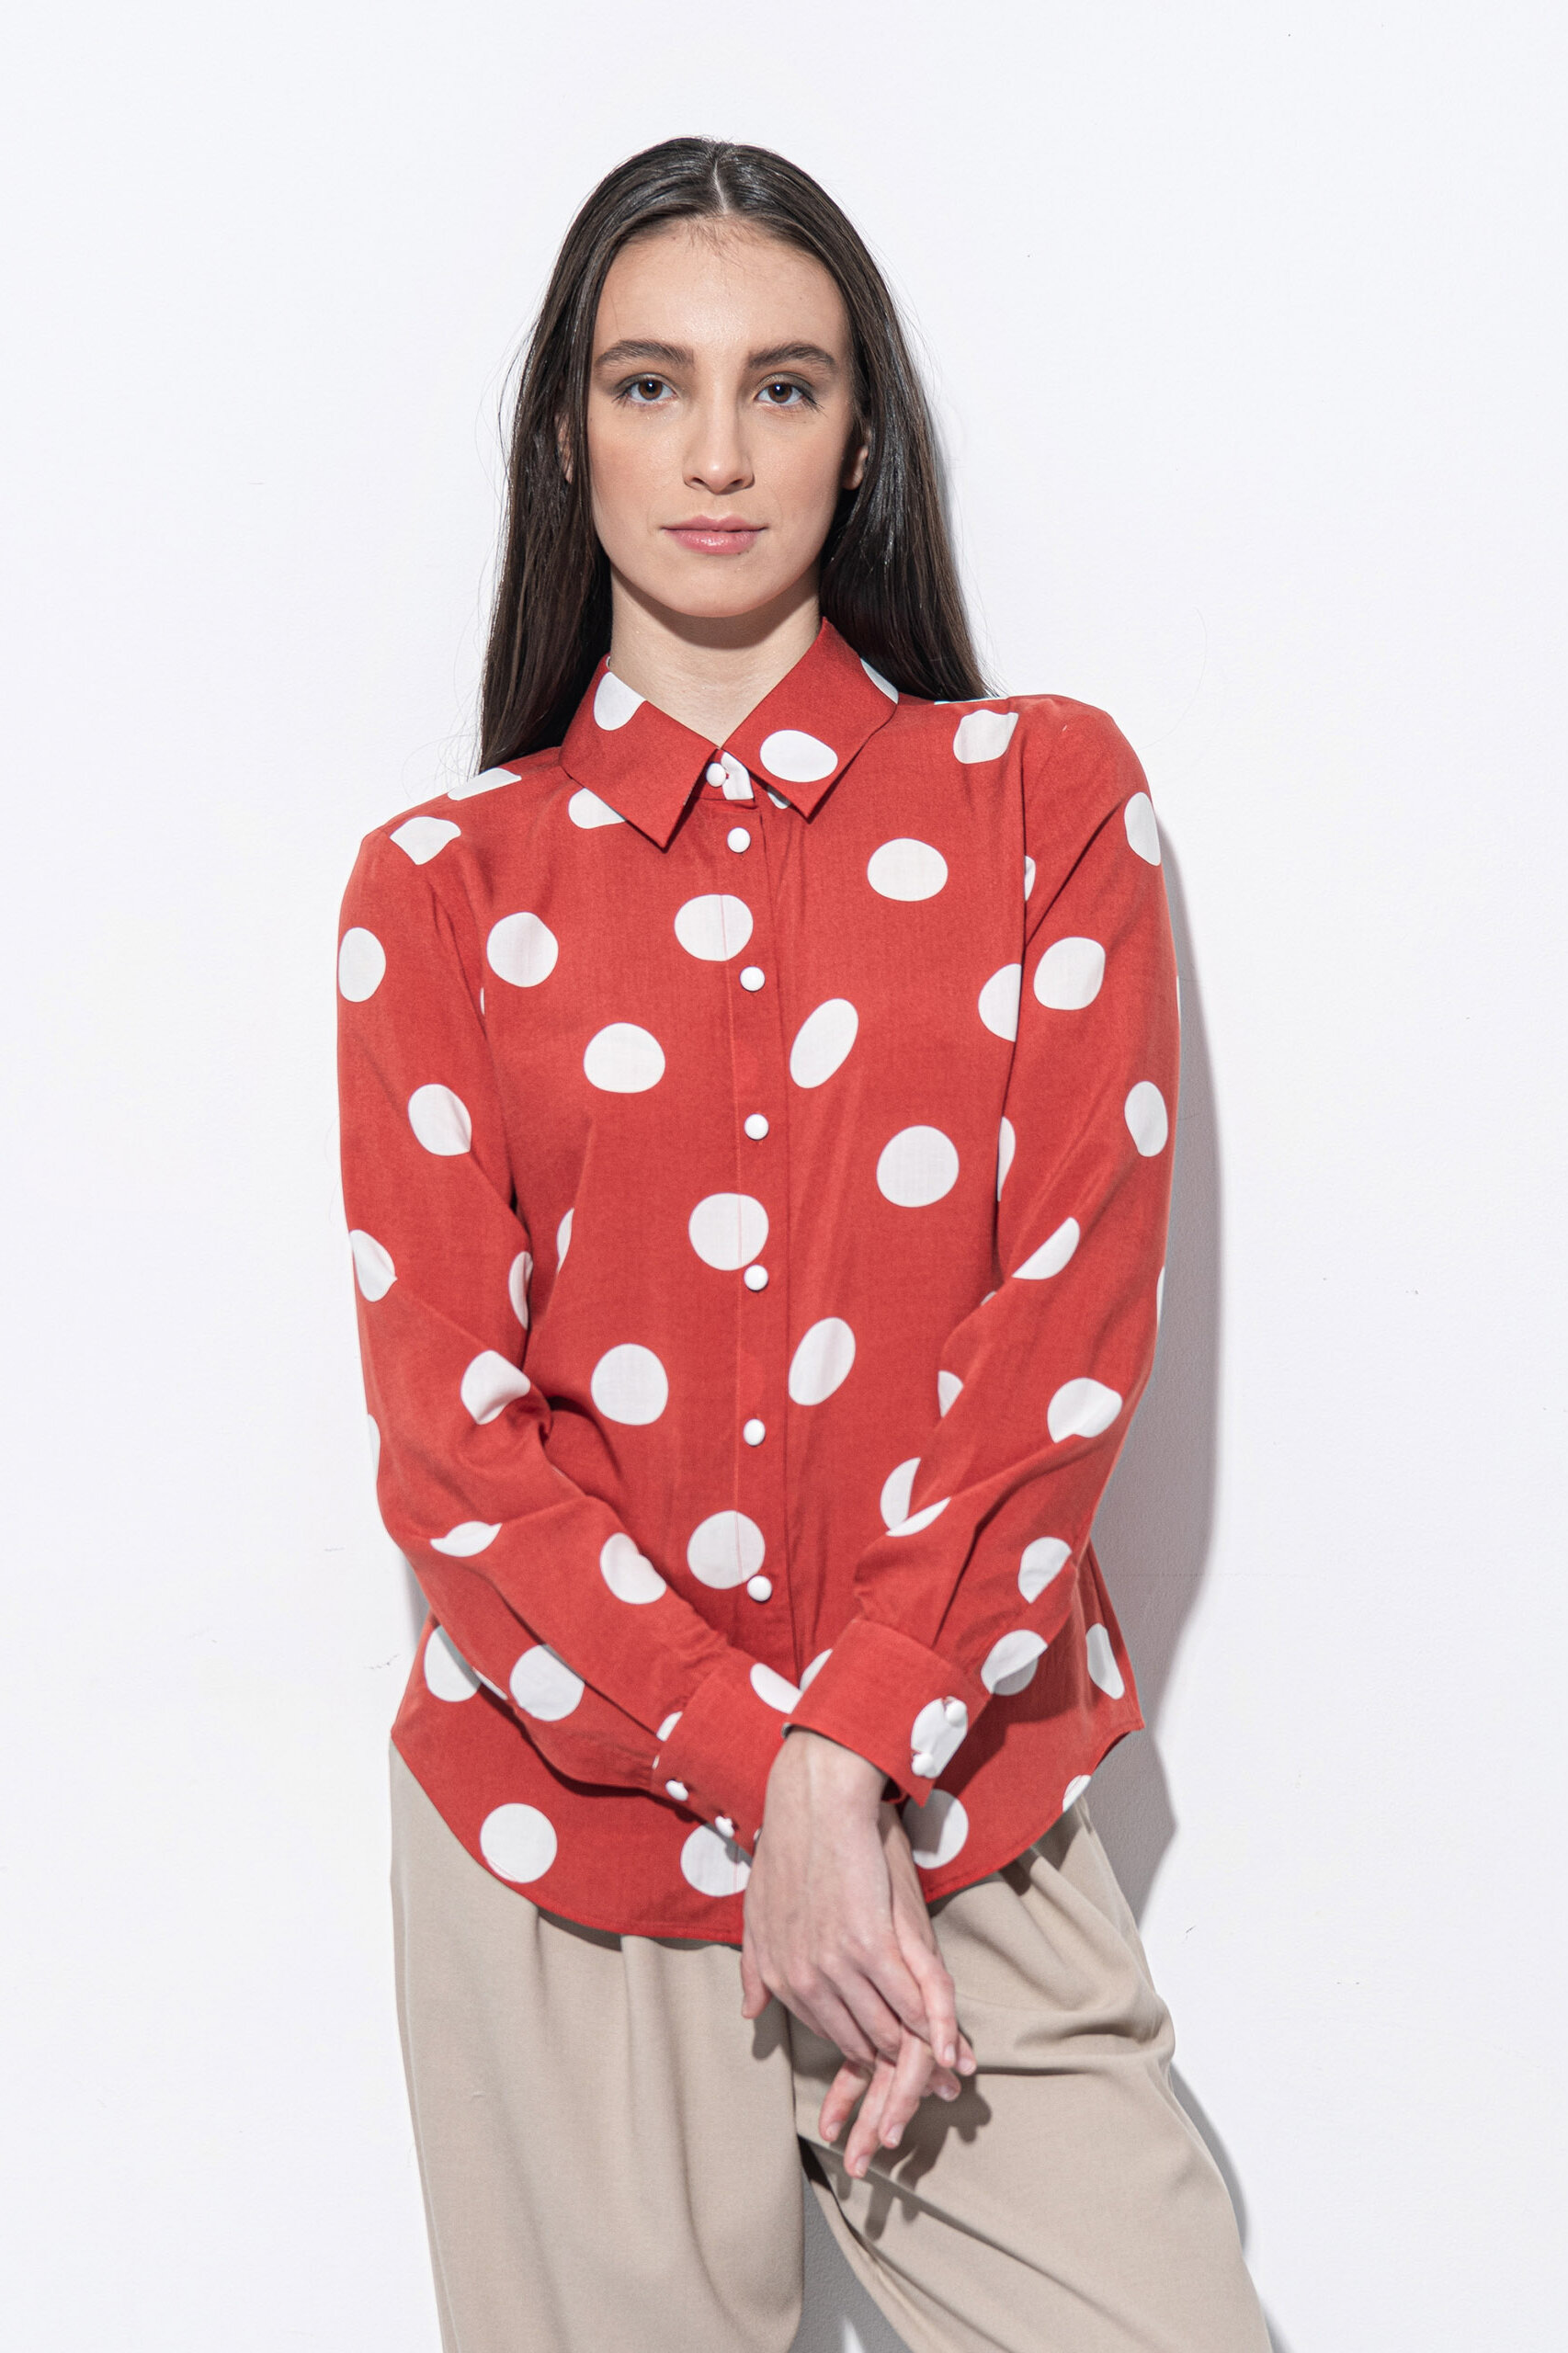 Red shirt with white spots uai • Sassa Björg